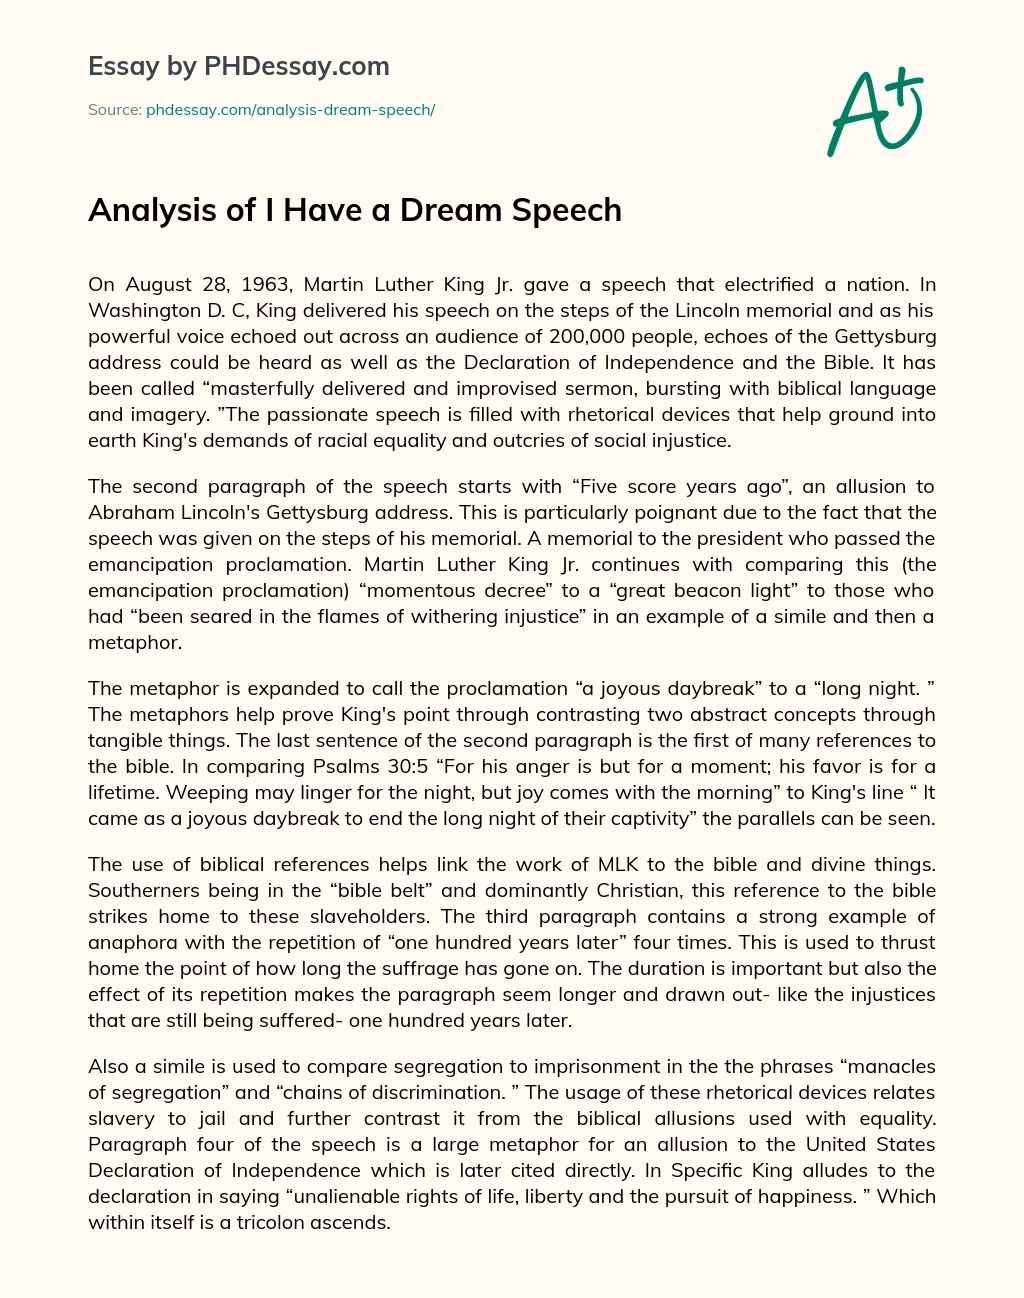 Analysis of I Have a Dream Speech essay